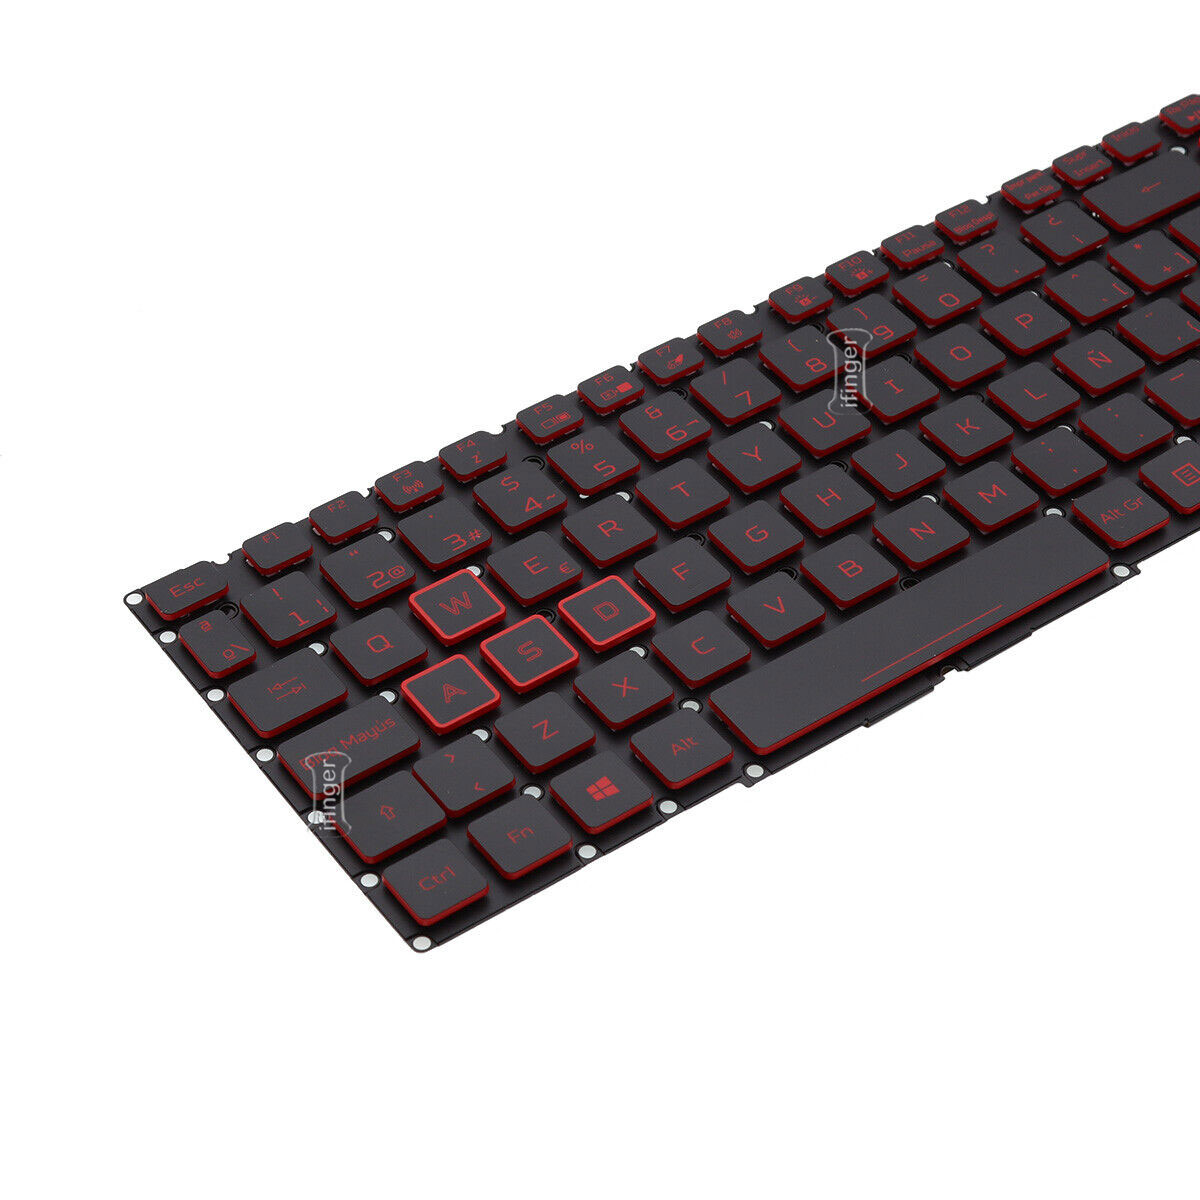 Teclado Acer SV3T_AB0B Series Español Negro Retroluminado Rojo